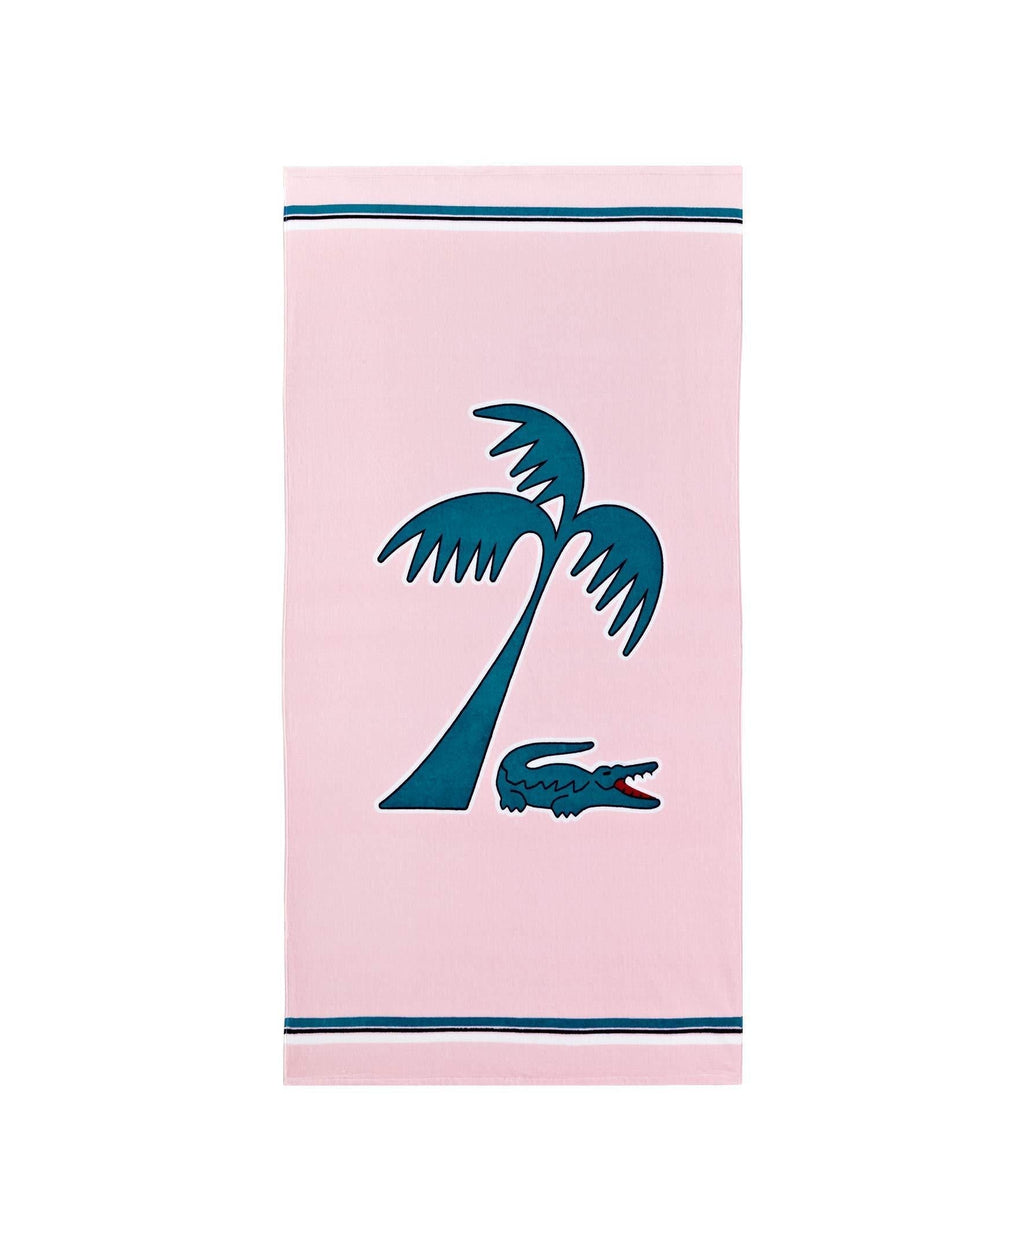  [AUSTRALIA] - Lacoste Murphy 100% Cotton Beach Towel, 36" W x 72" L, Pink/Teal Palm